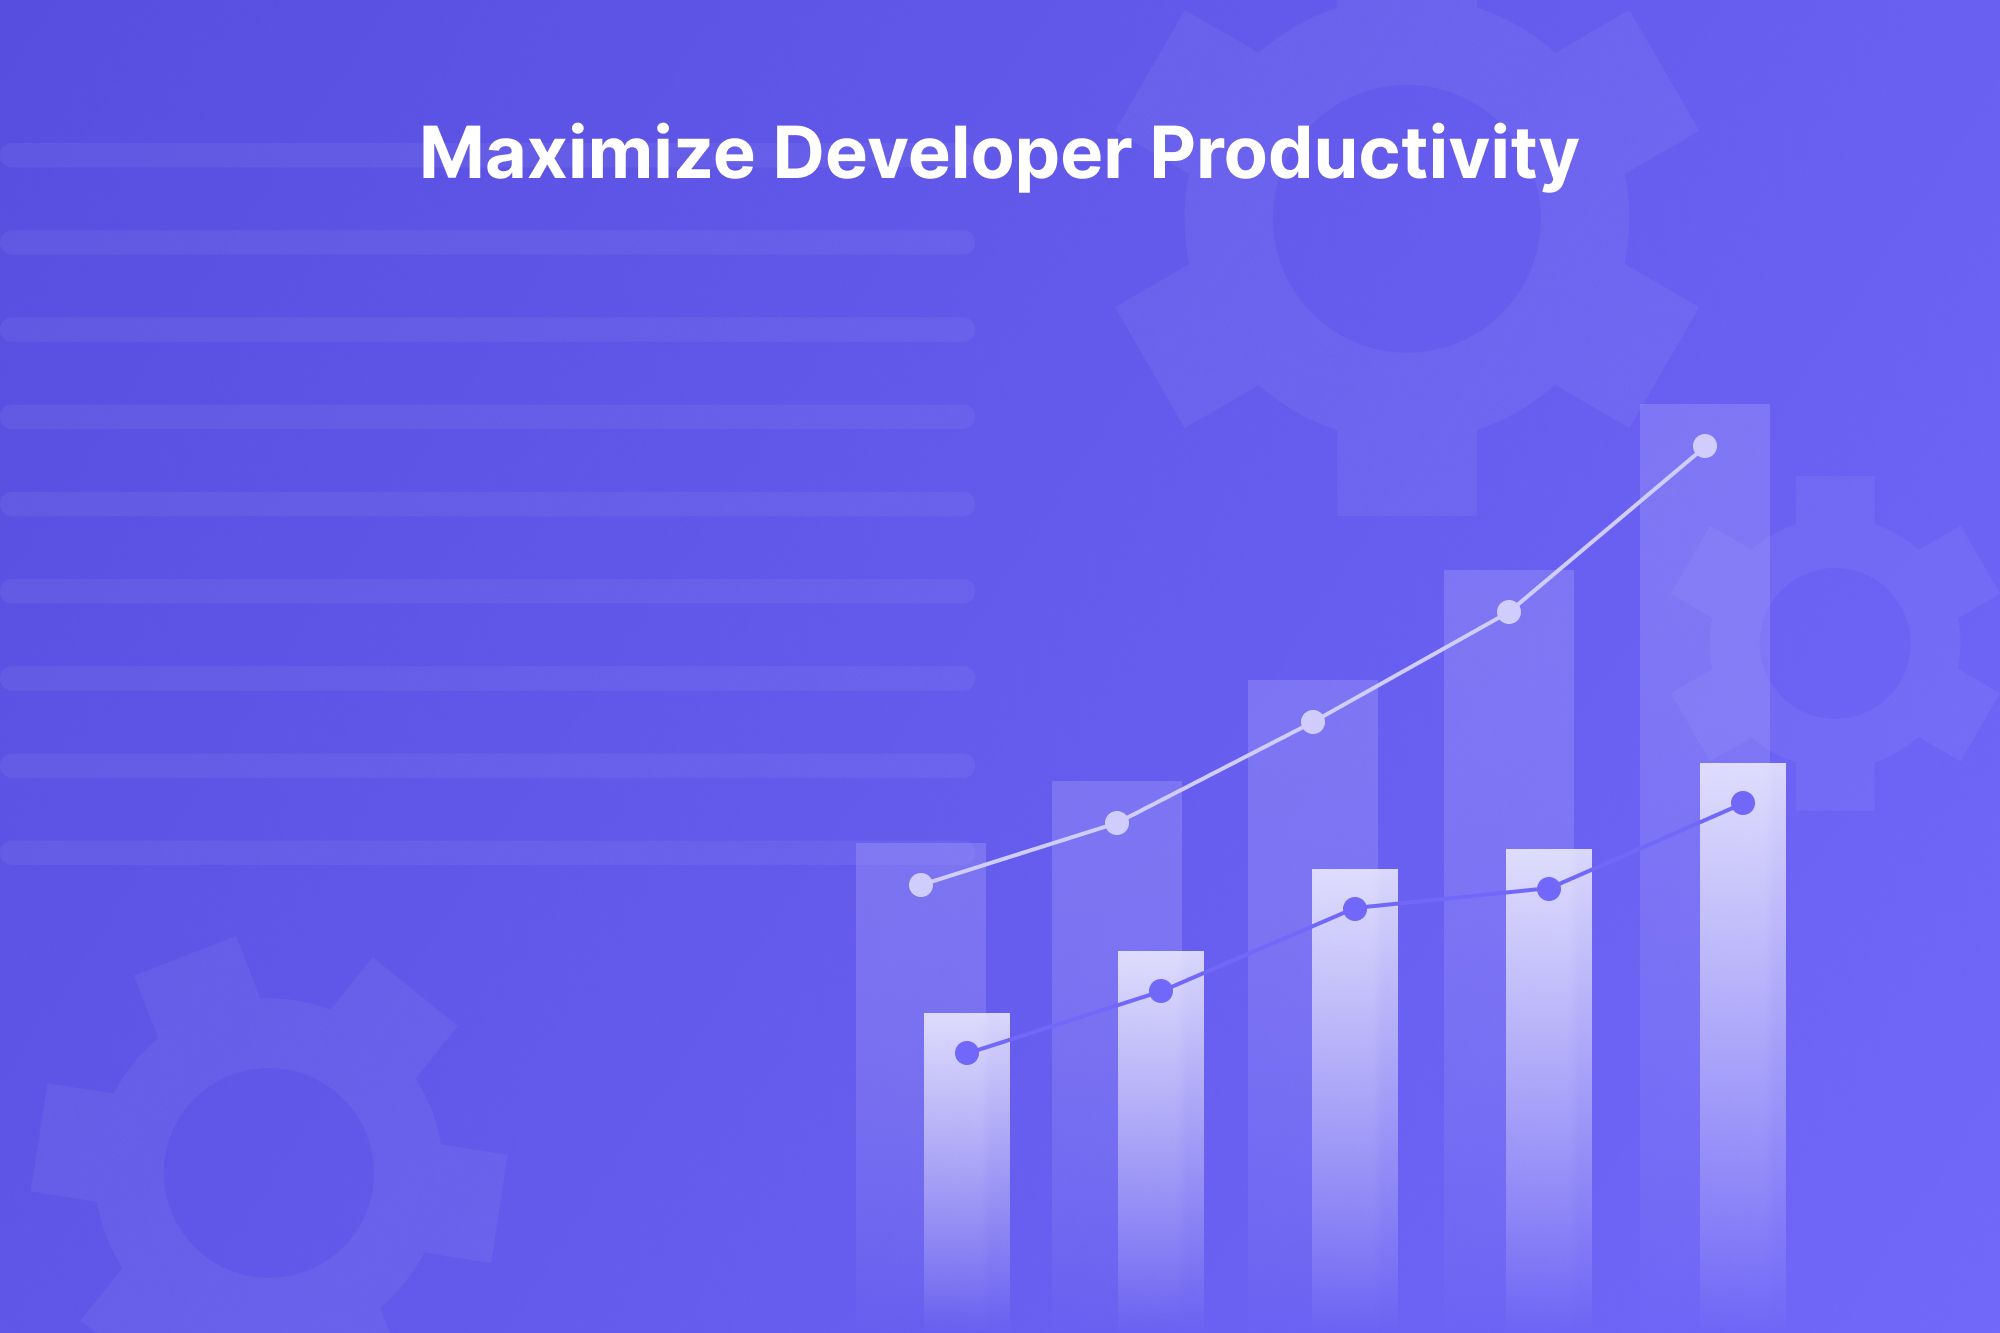 How to Measure & Maximize Developer Productivity? - A Quick Guide